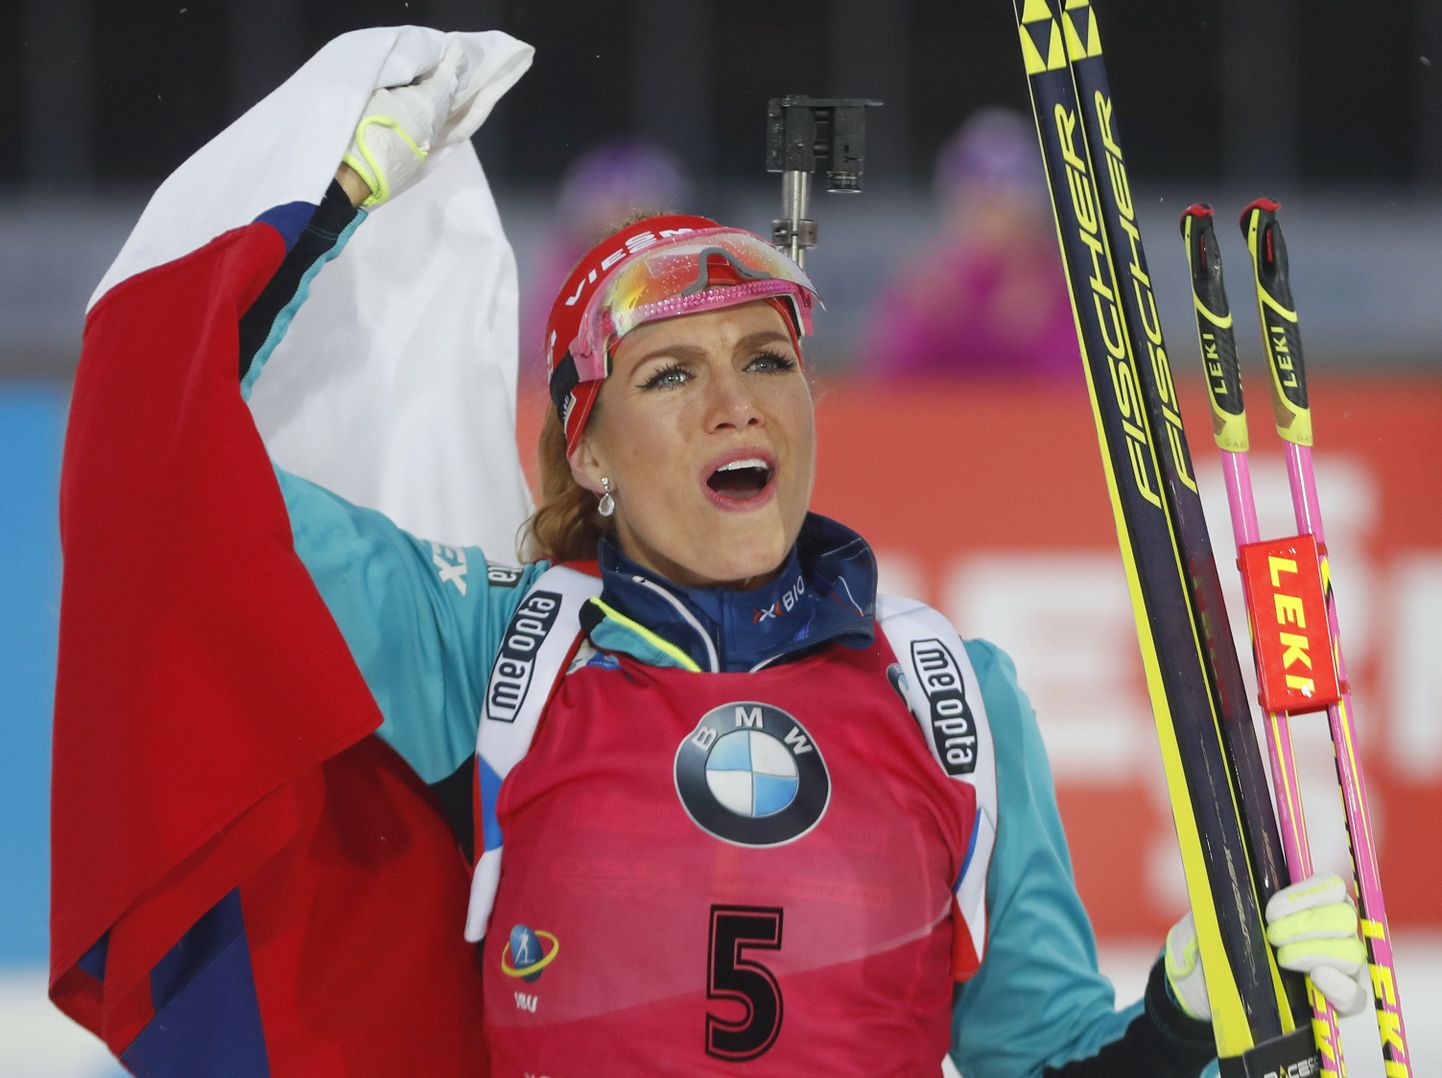 Czech Republic's Gabriela Koukalova celebrates after winning the women's Biathlon World Cup 12.5 km mass start event in Nove Mesto na Morave, Czech Republic, Sunday, Dec. 18, 2016. (AP Photo/Petr David Josek)